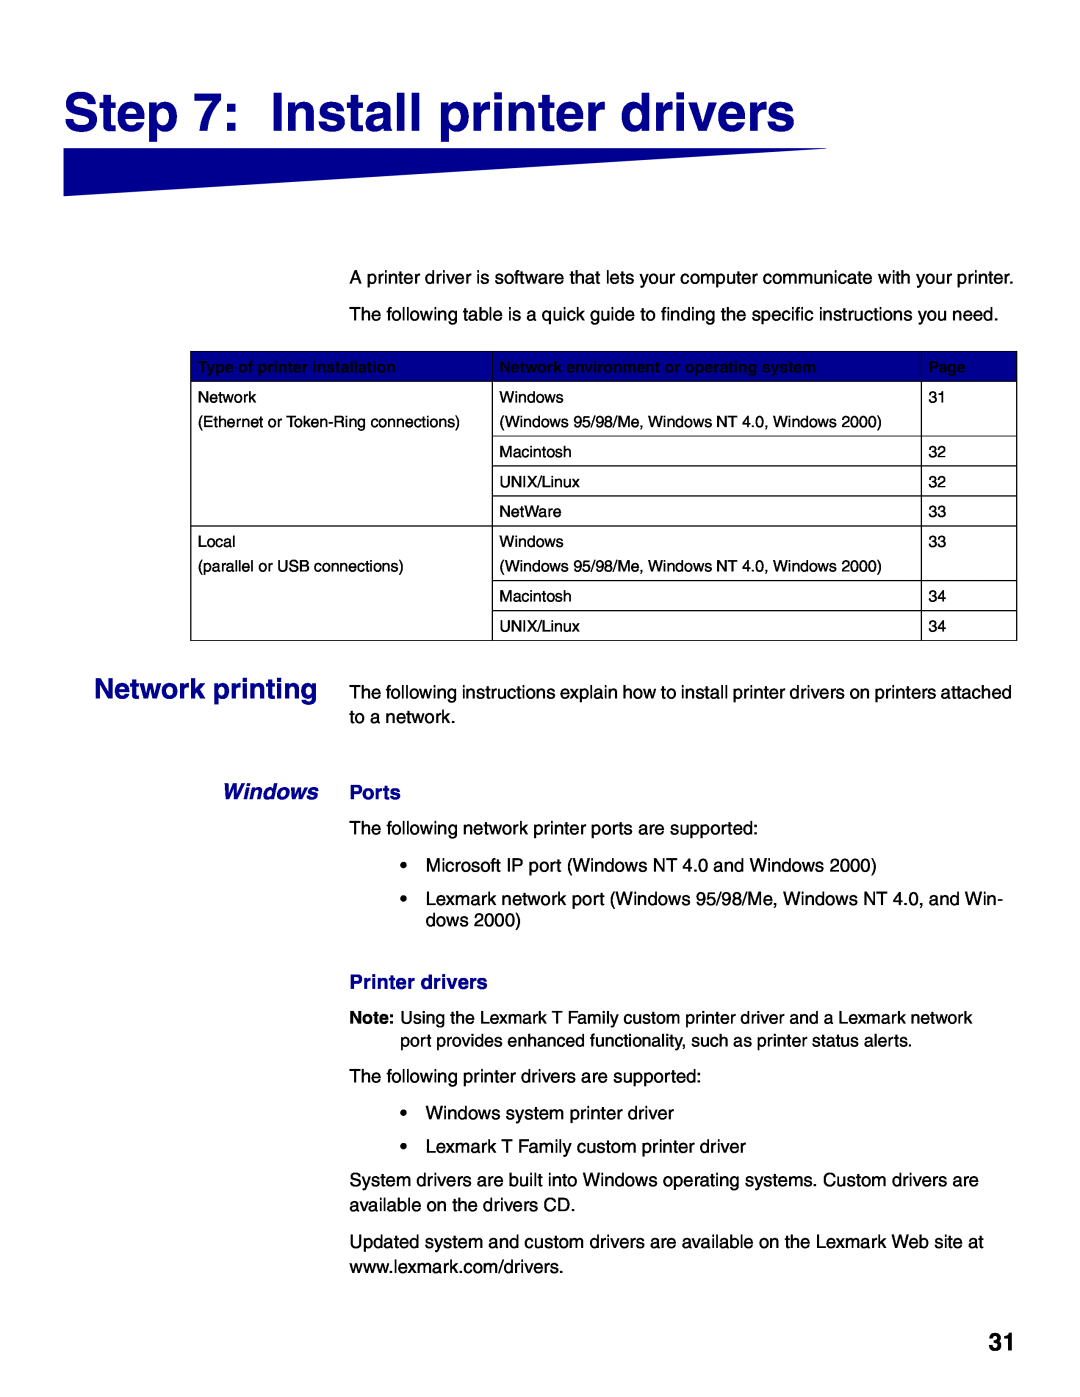 Lexmark T622, T620 setup guide Install printer drivers, Printer drivers, Windows Ports 